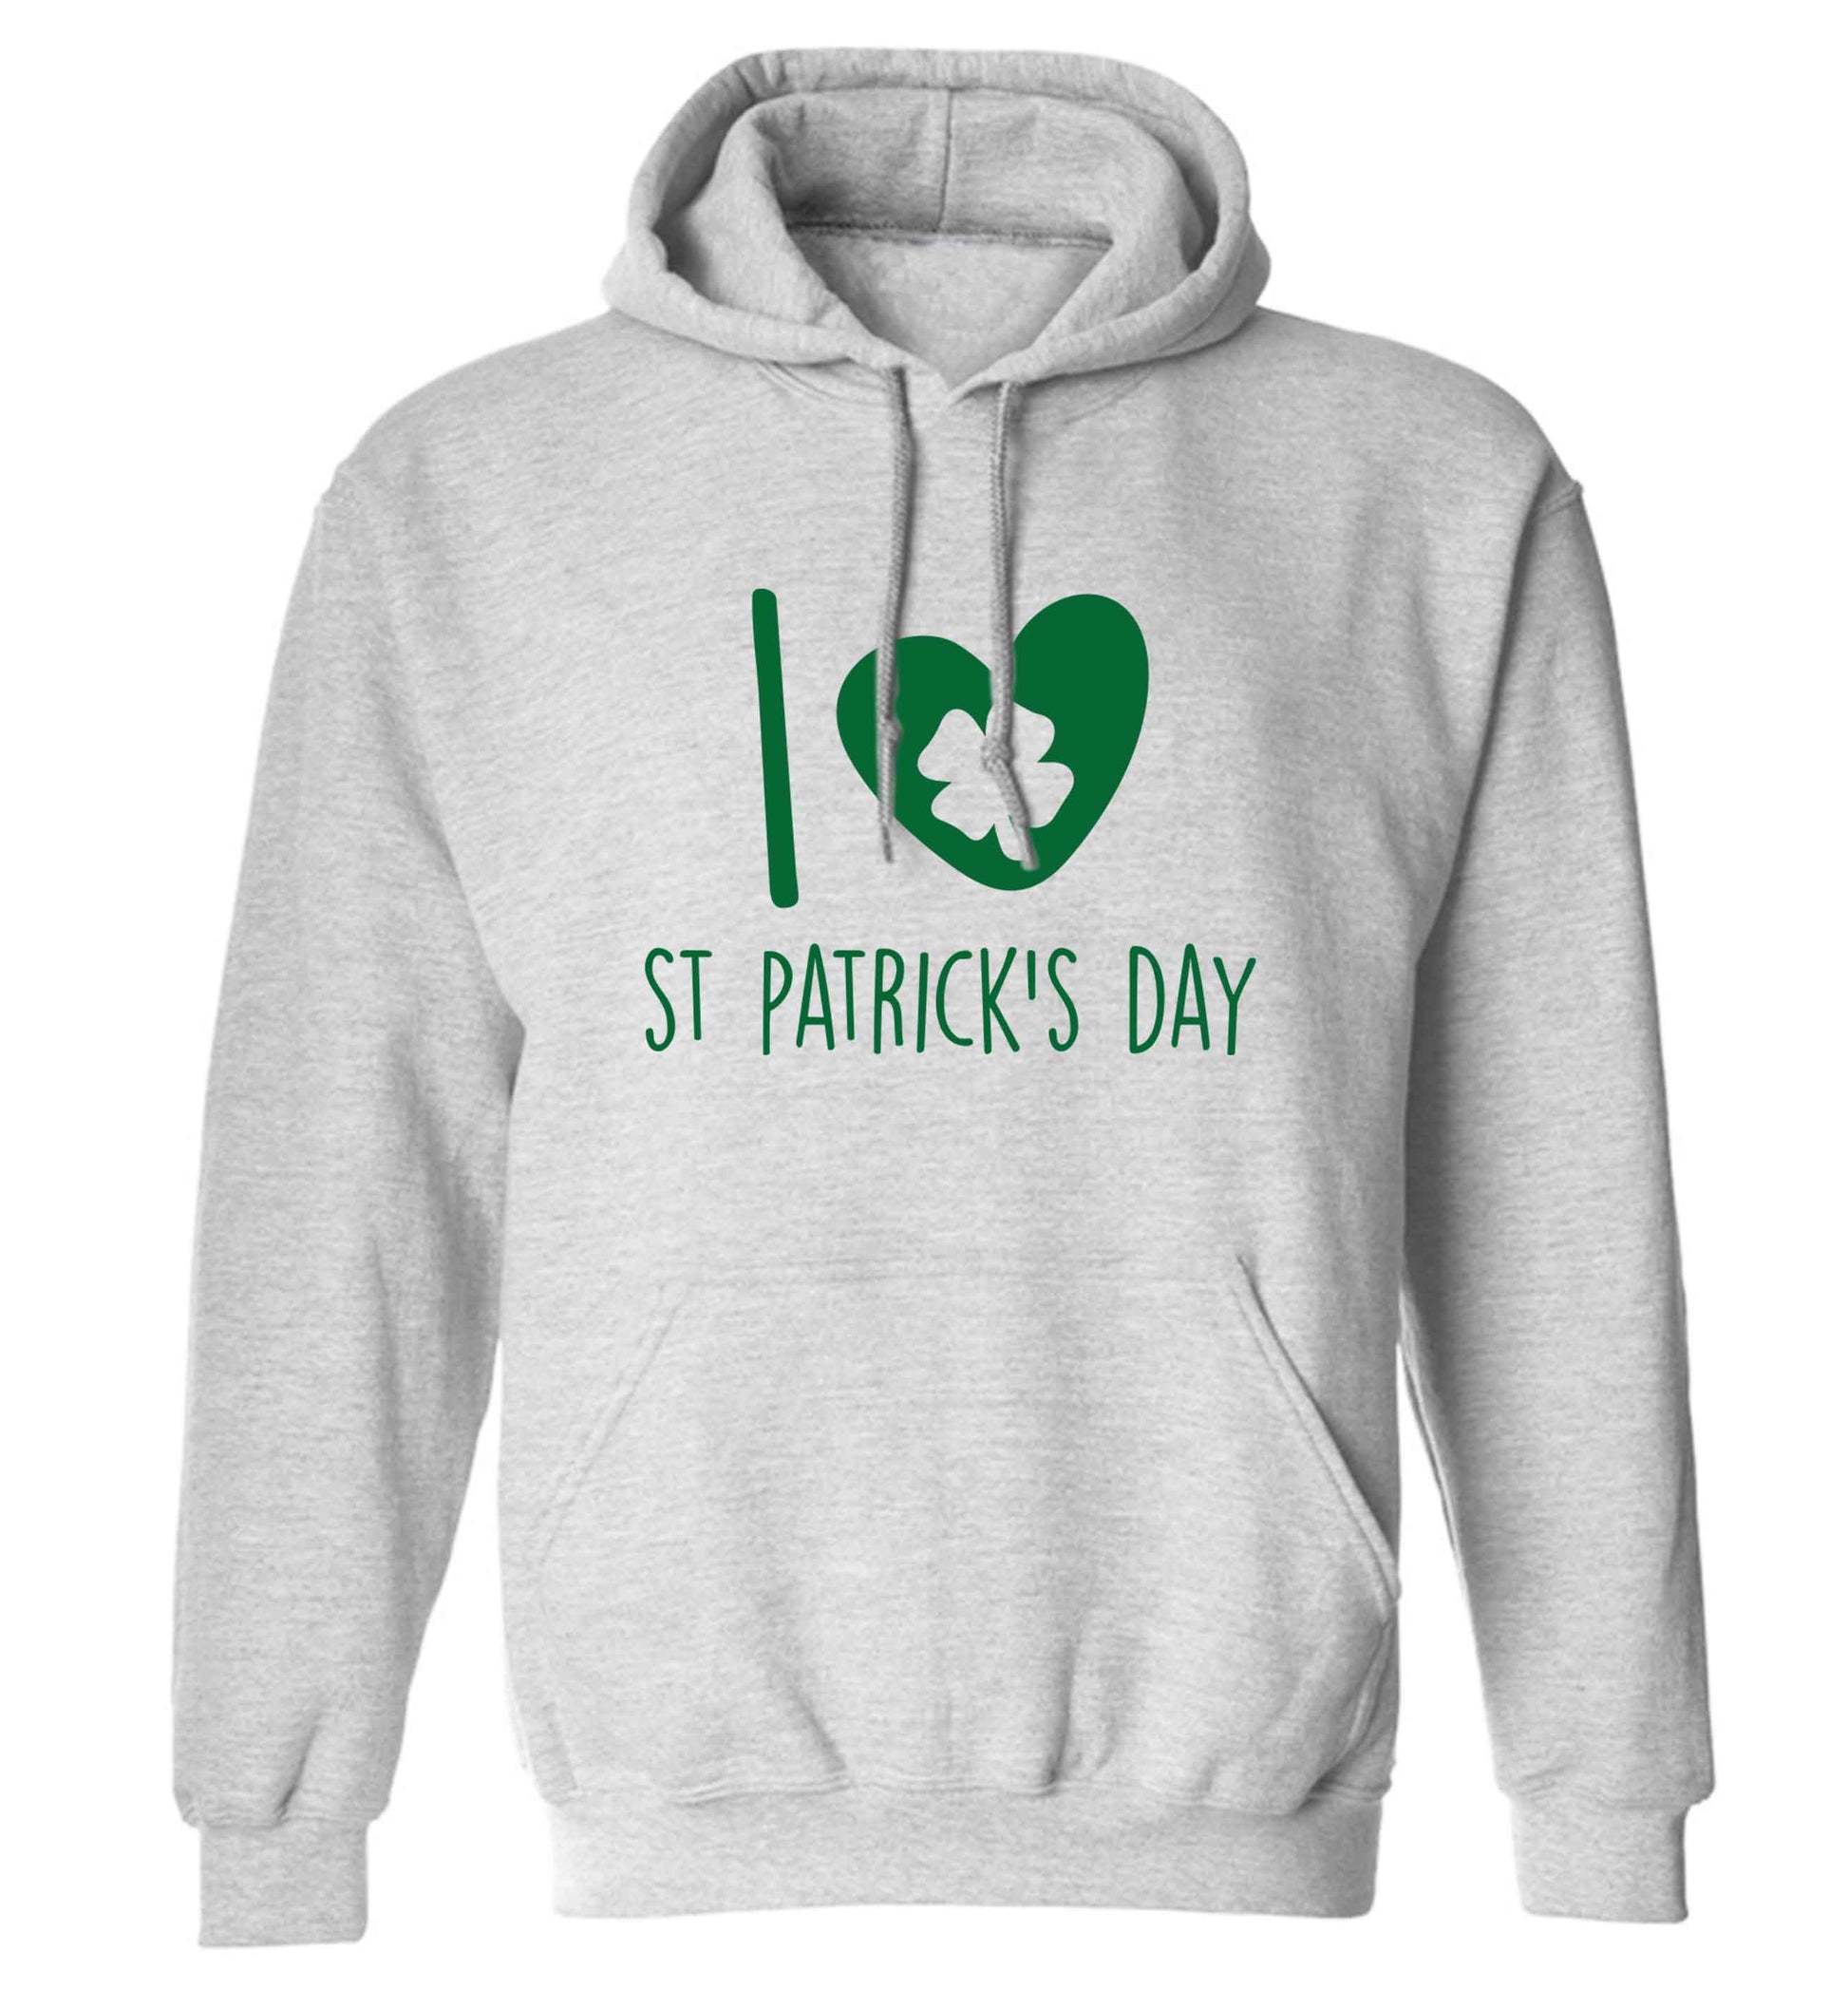 I love St.Patricks day adults unisex grey hoodie 2XL